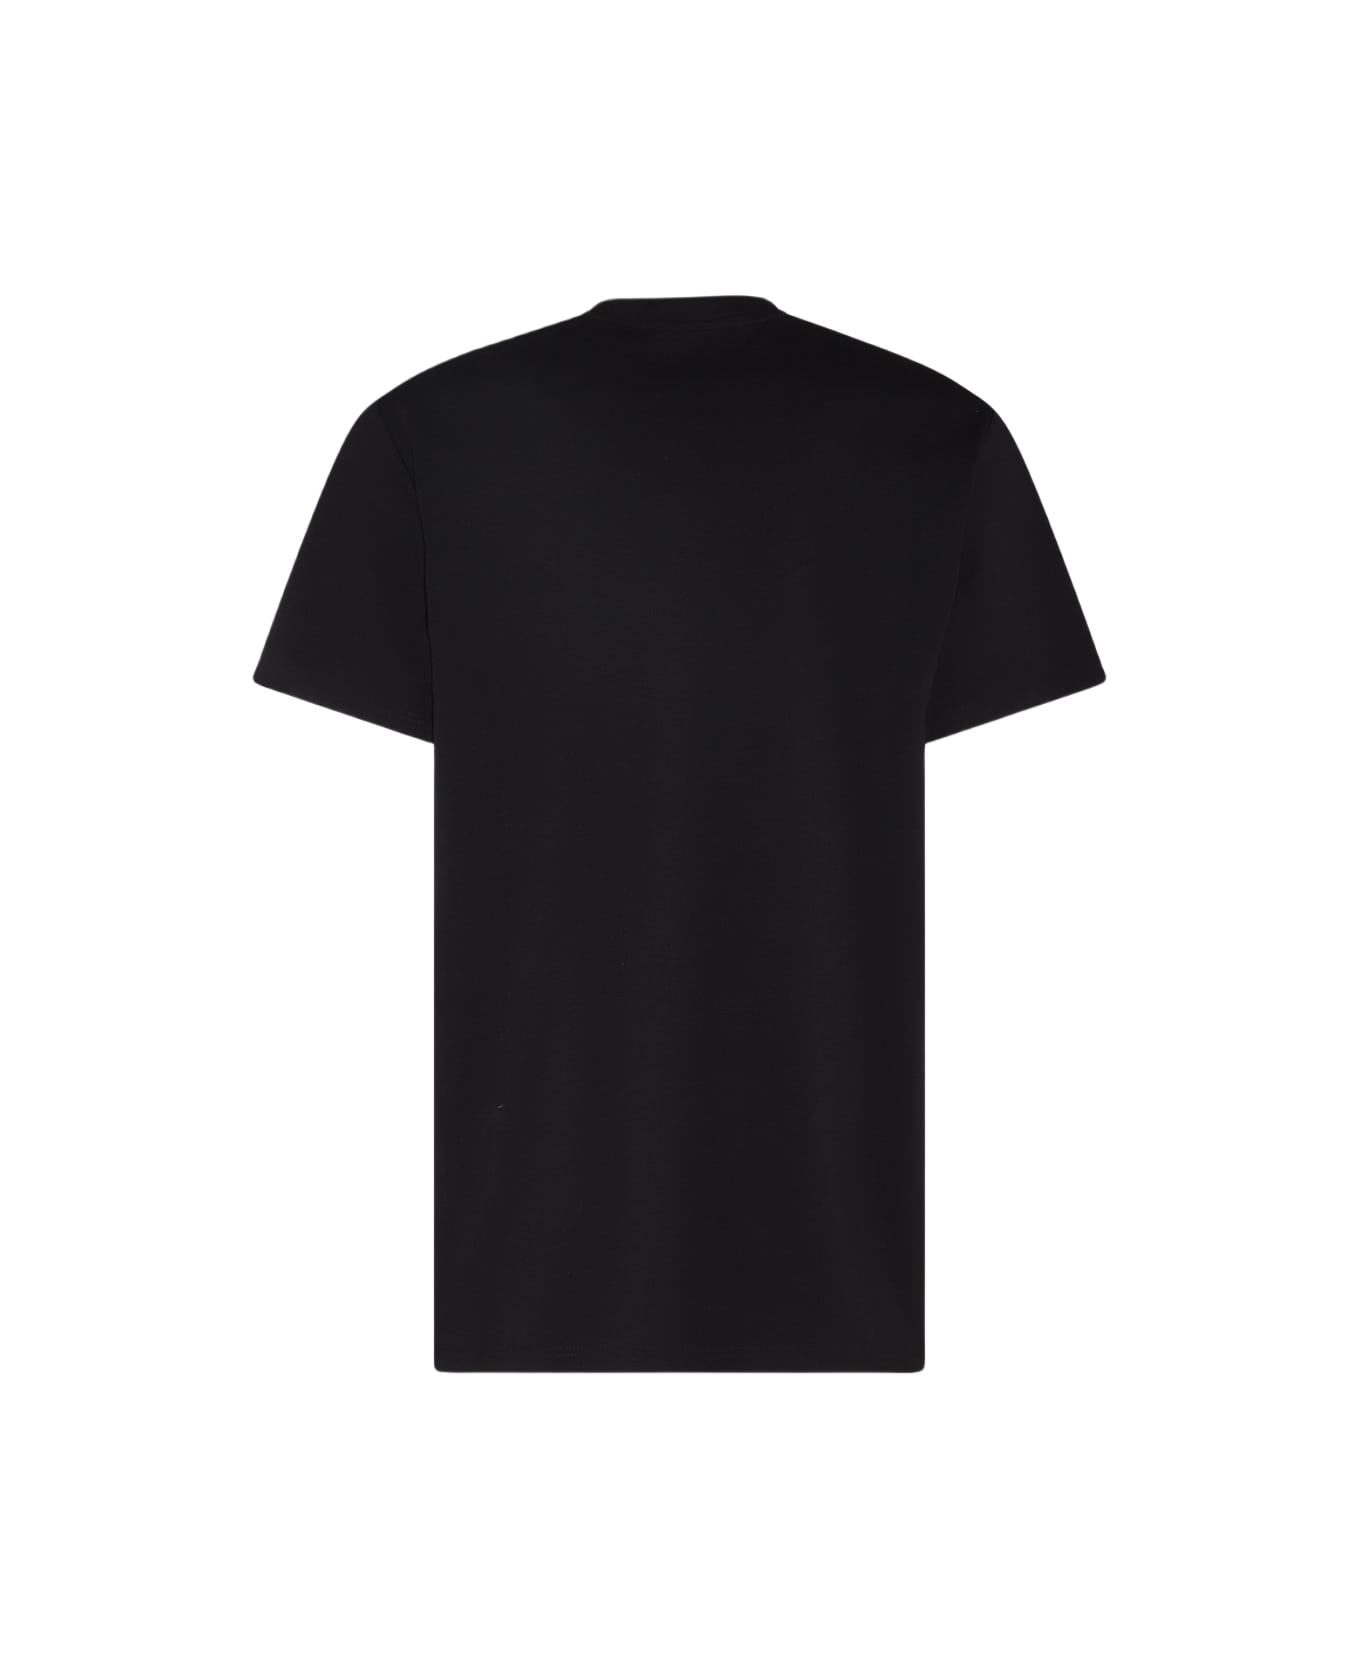 FourTwoFour on Fairfax Black And White Cotton T-shirt - Black